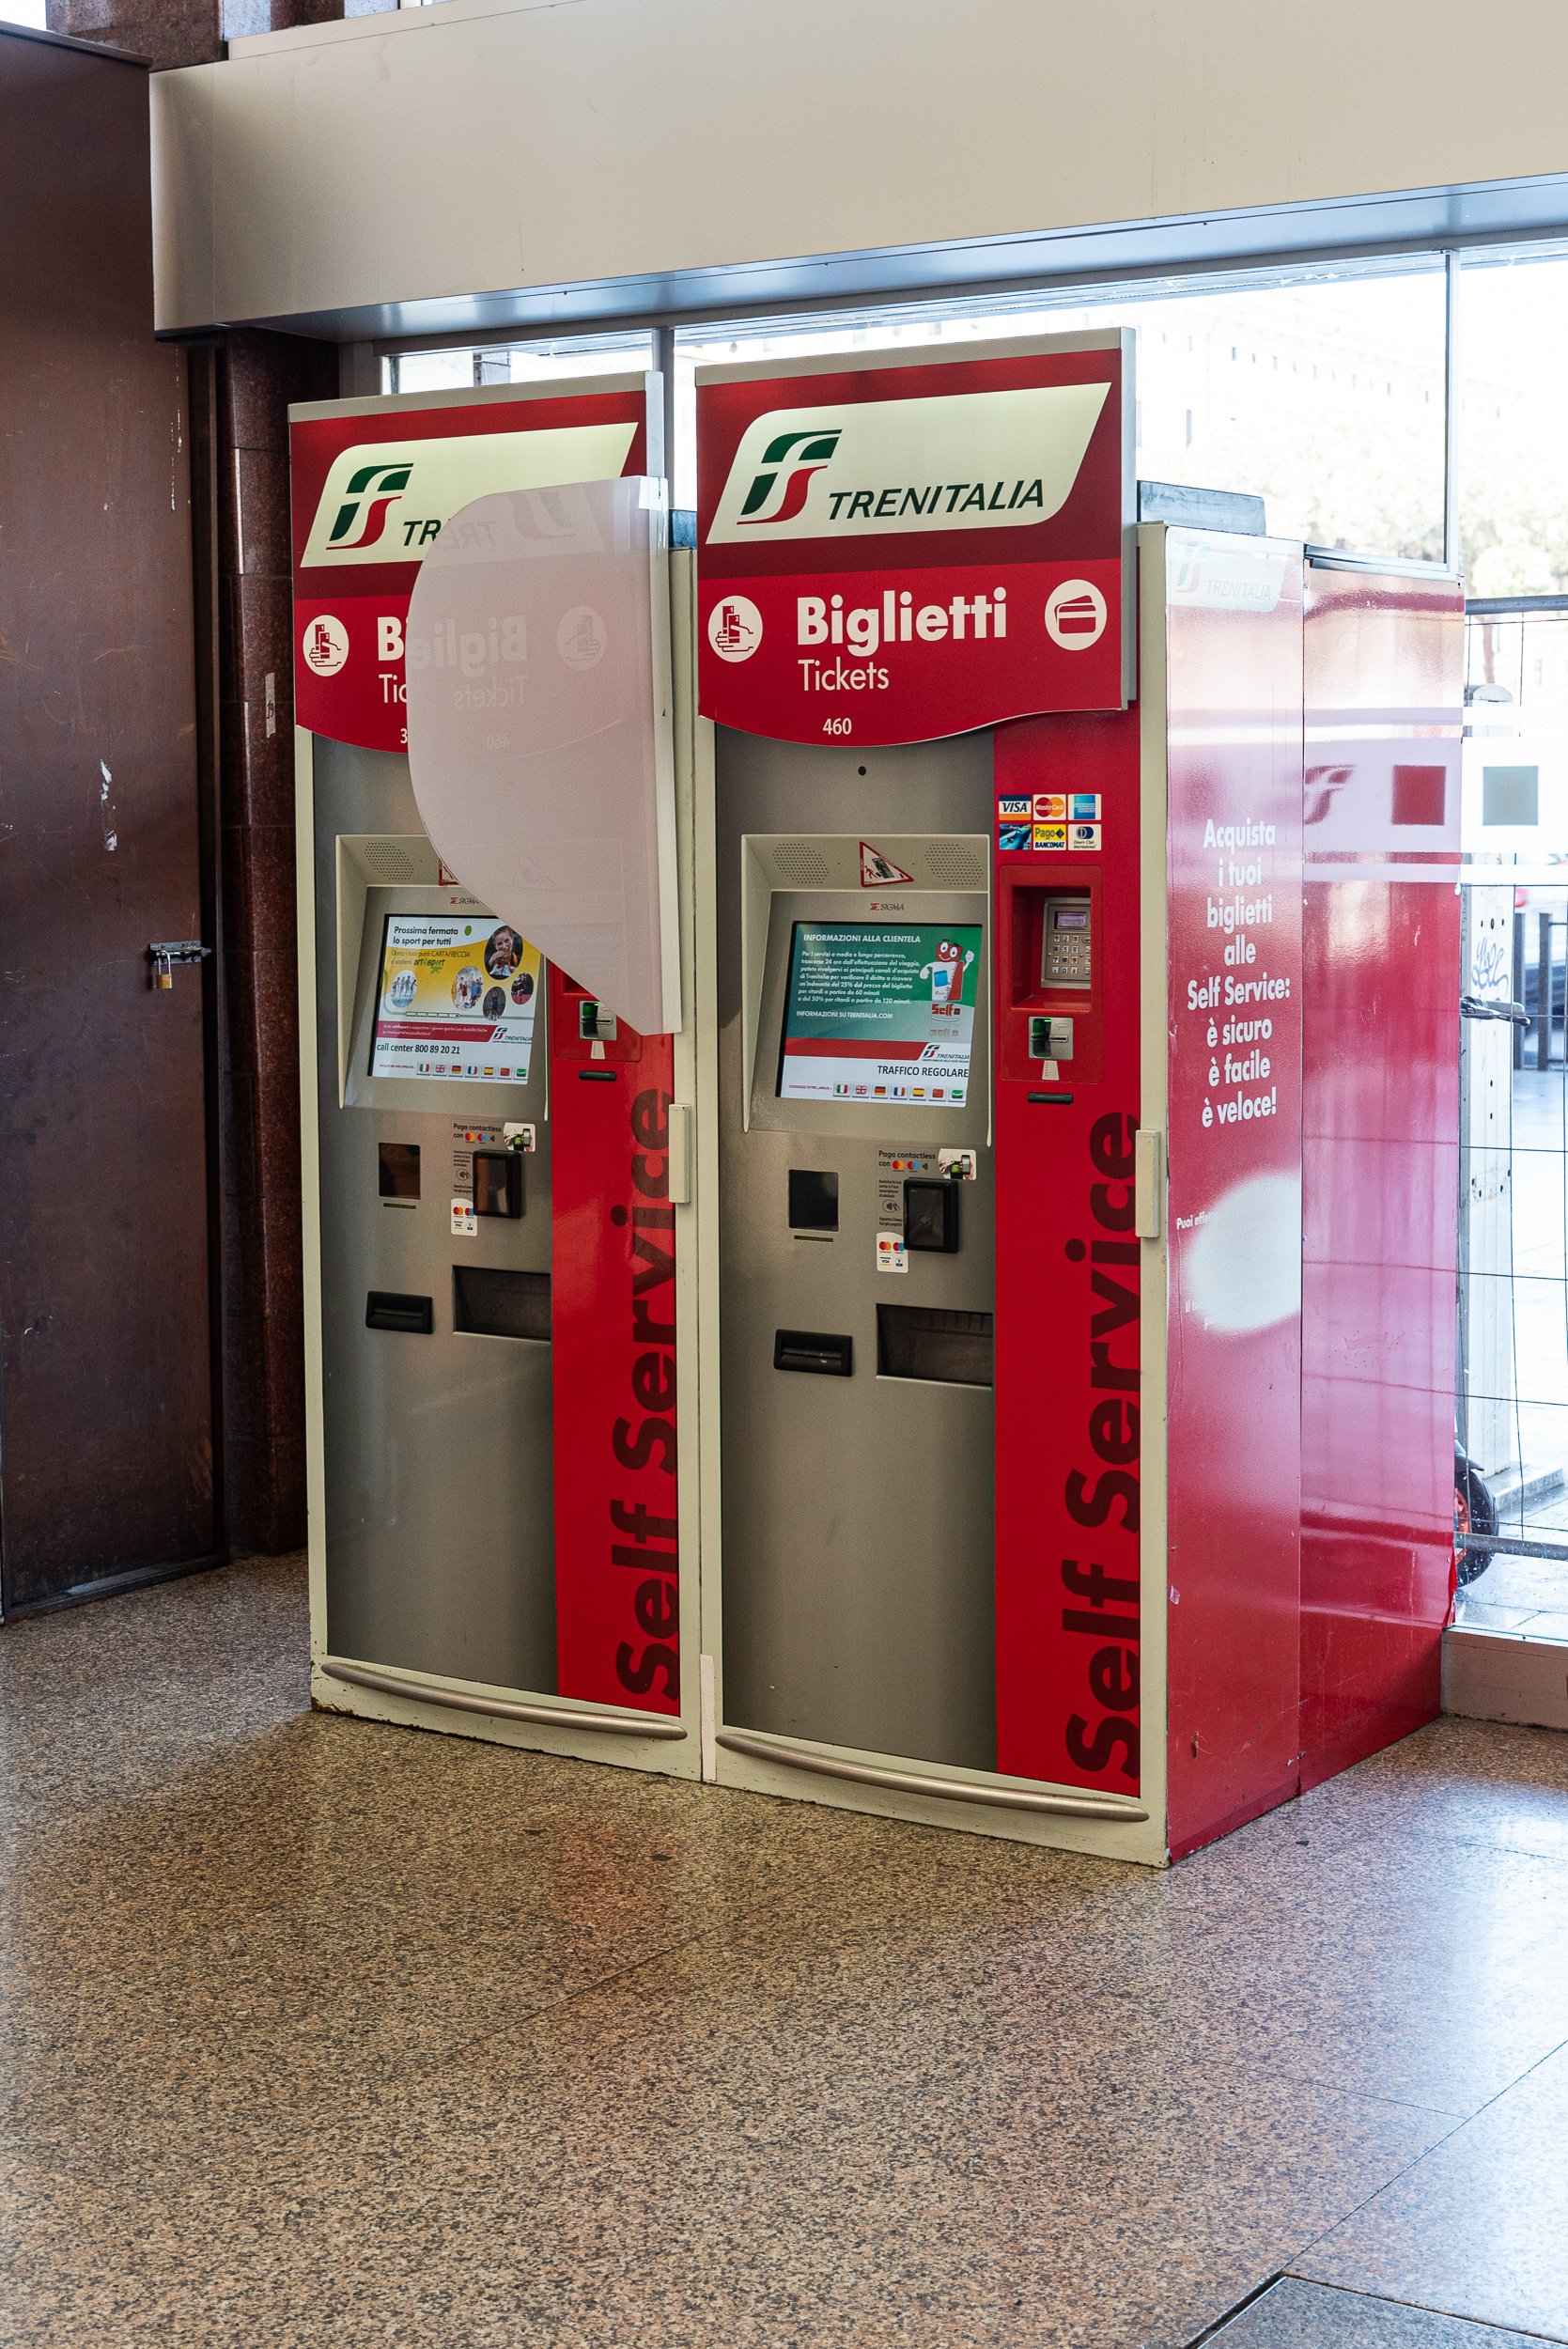 Train Travel In Italy - Self Service Kiosks